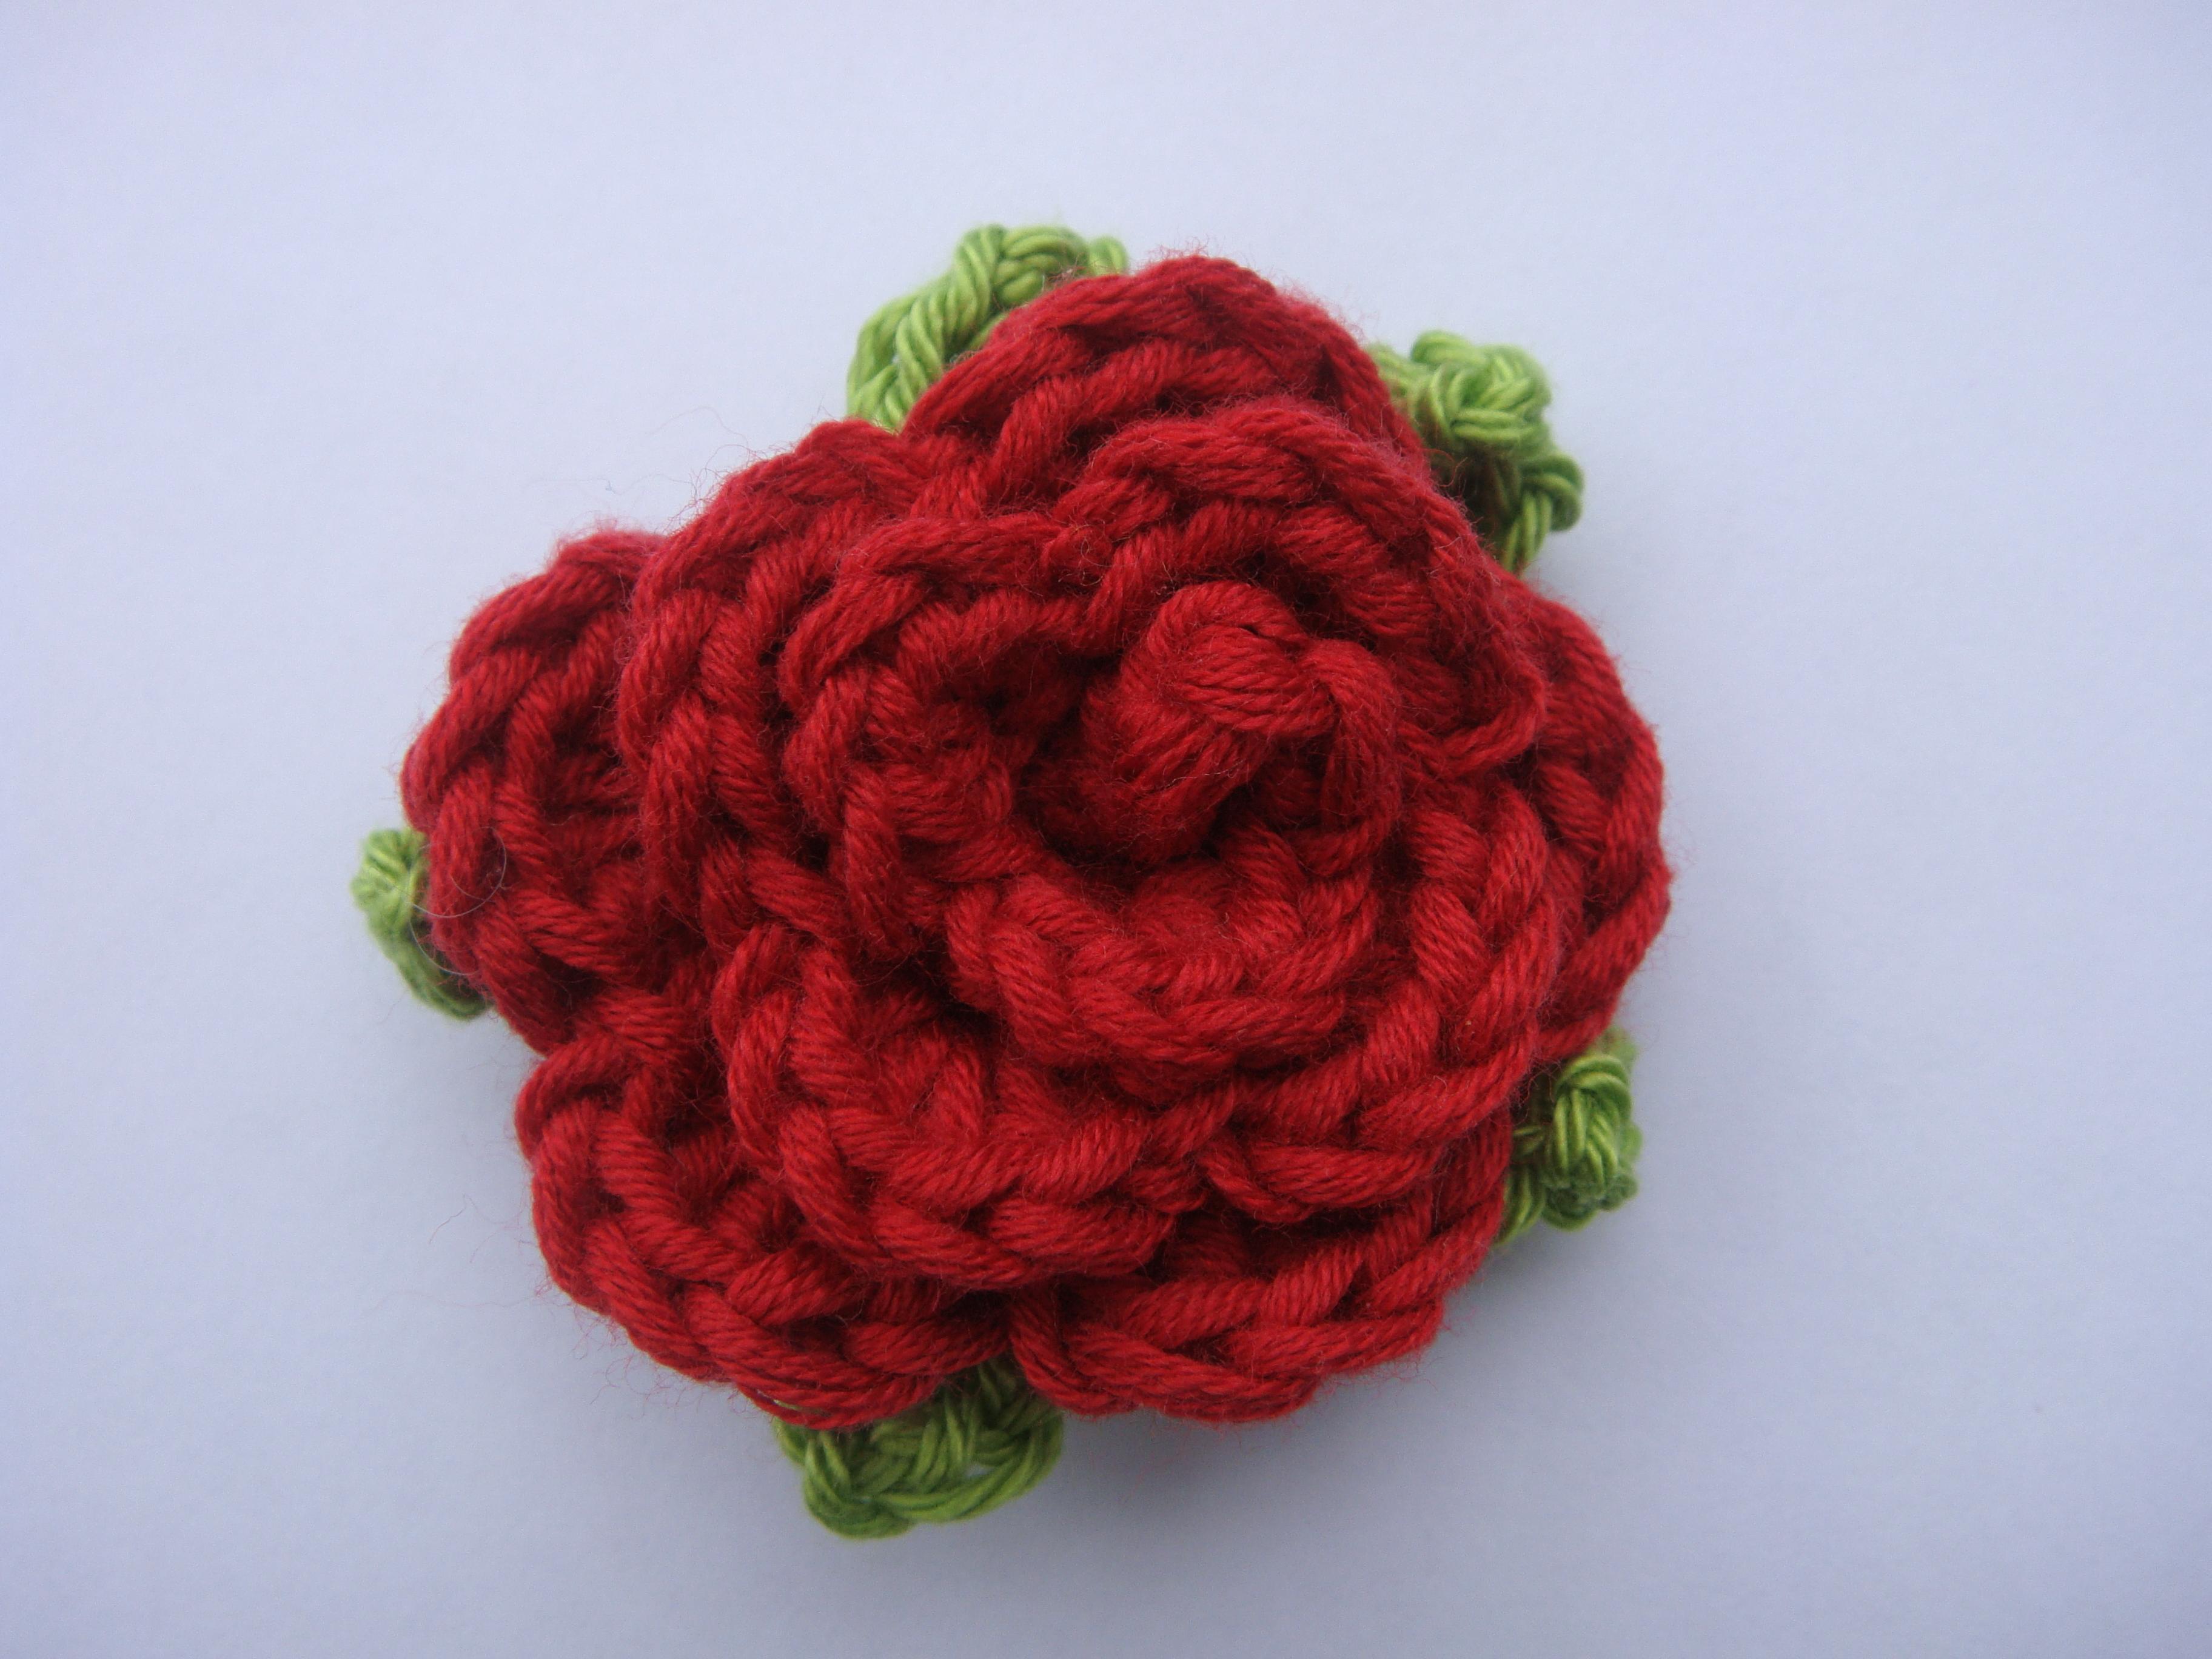 crochet rose brooch in red - Completeness